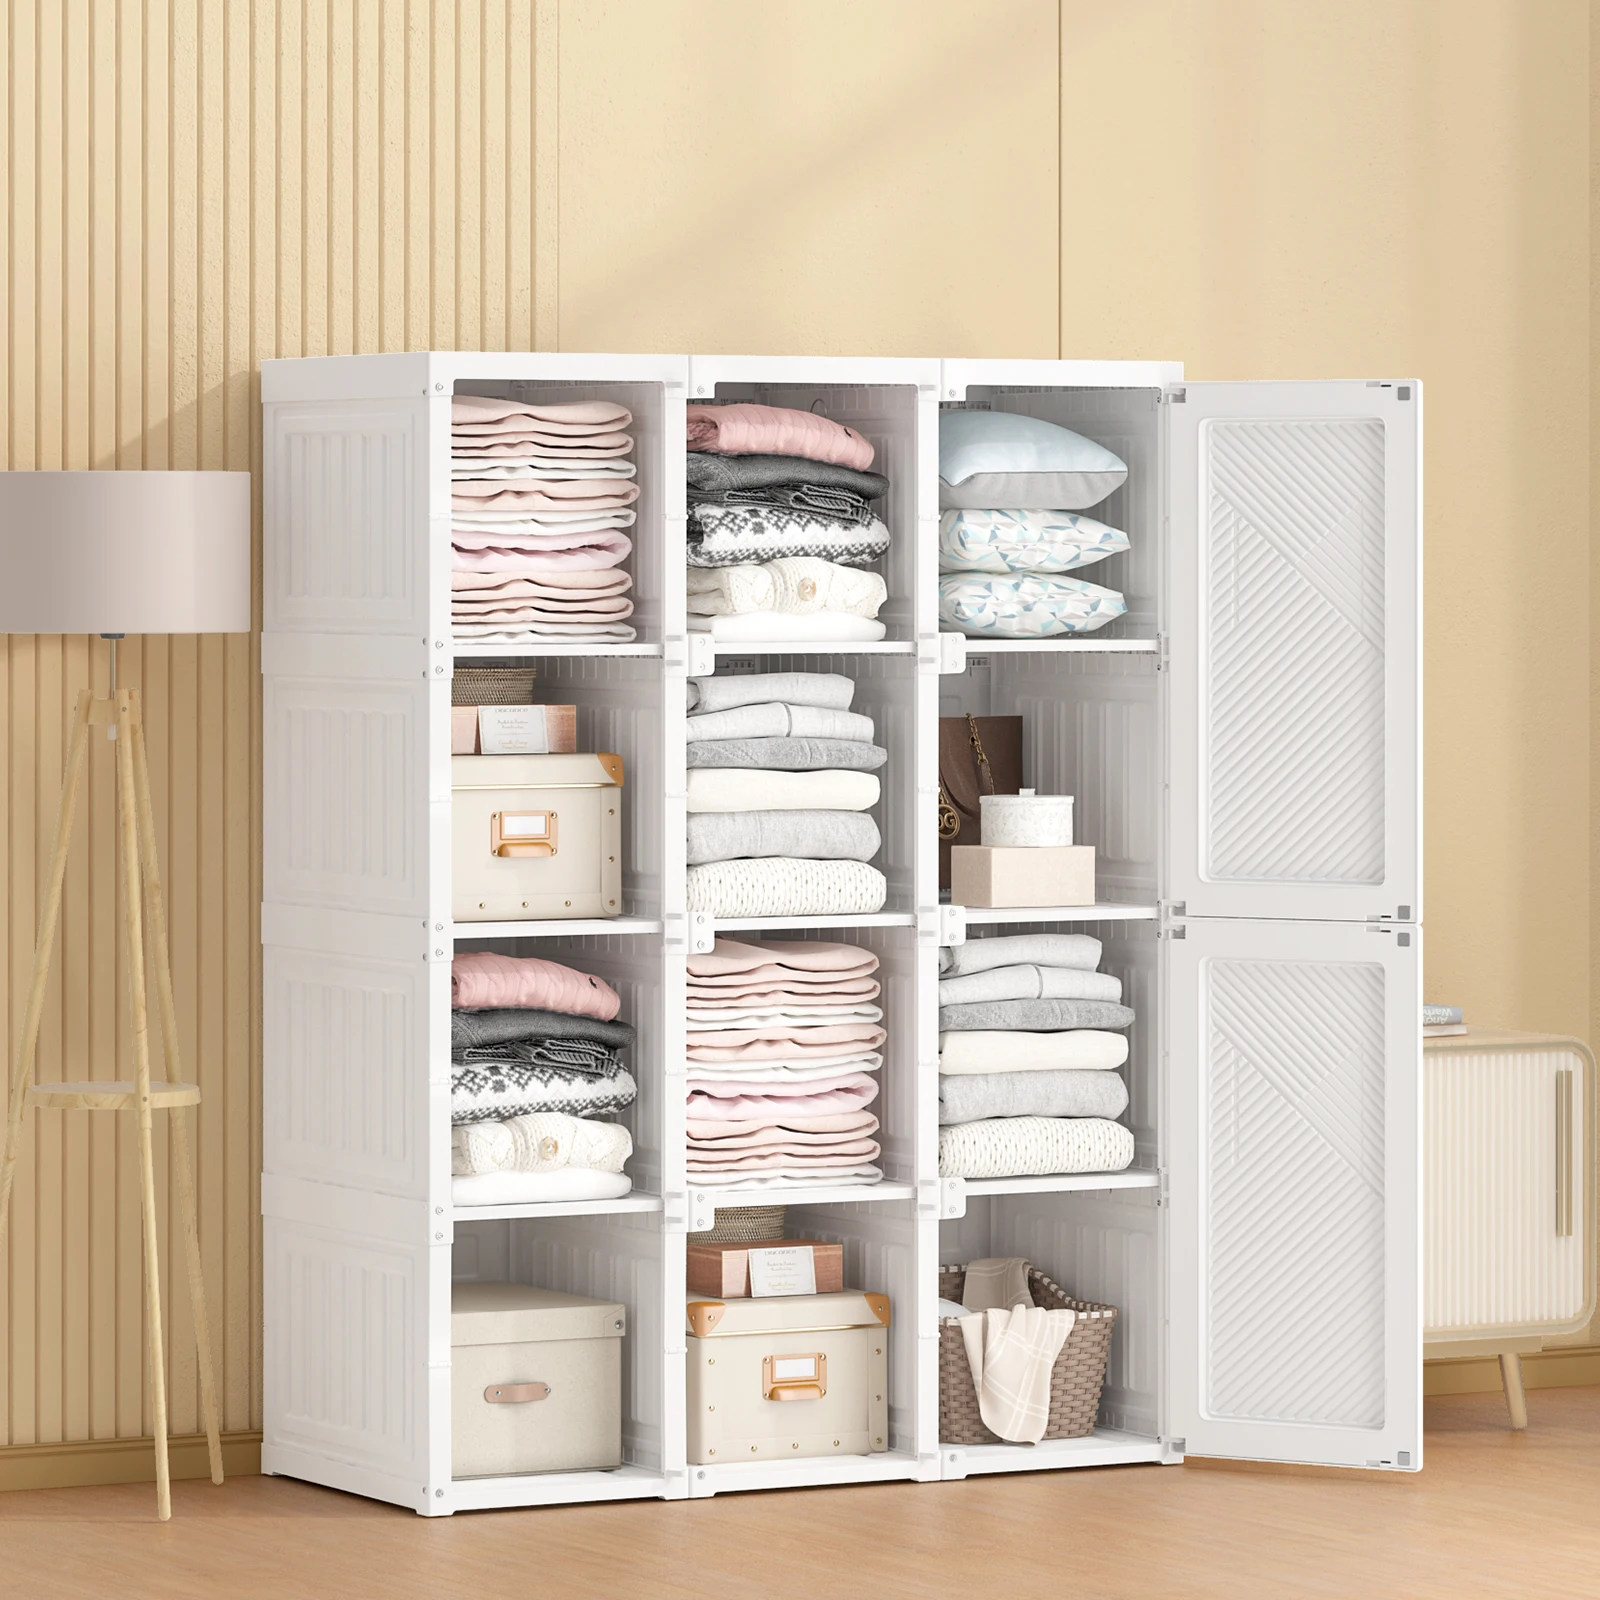 

Amazon Simple Wardrobe Folding Closet Fabric bedroom Furniture Clothes Storage Organizer Cabinet Locker Combination Clothing, White